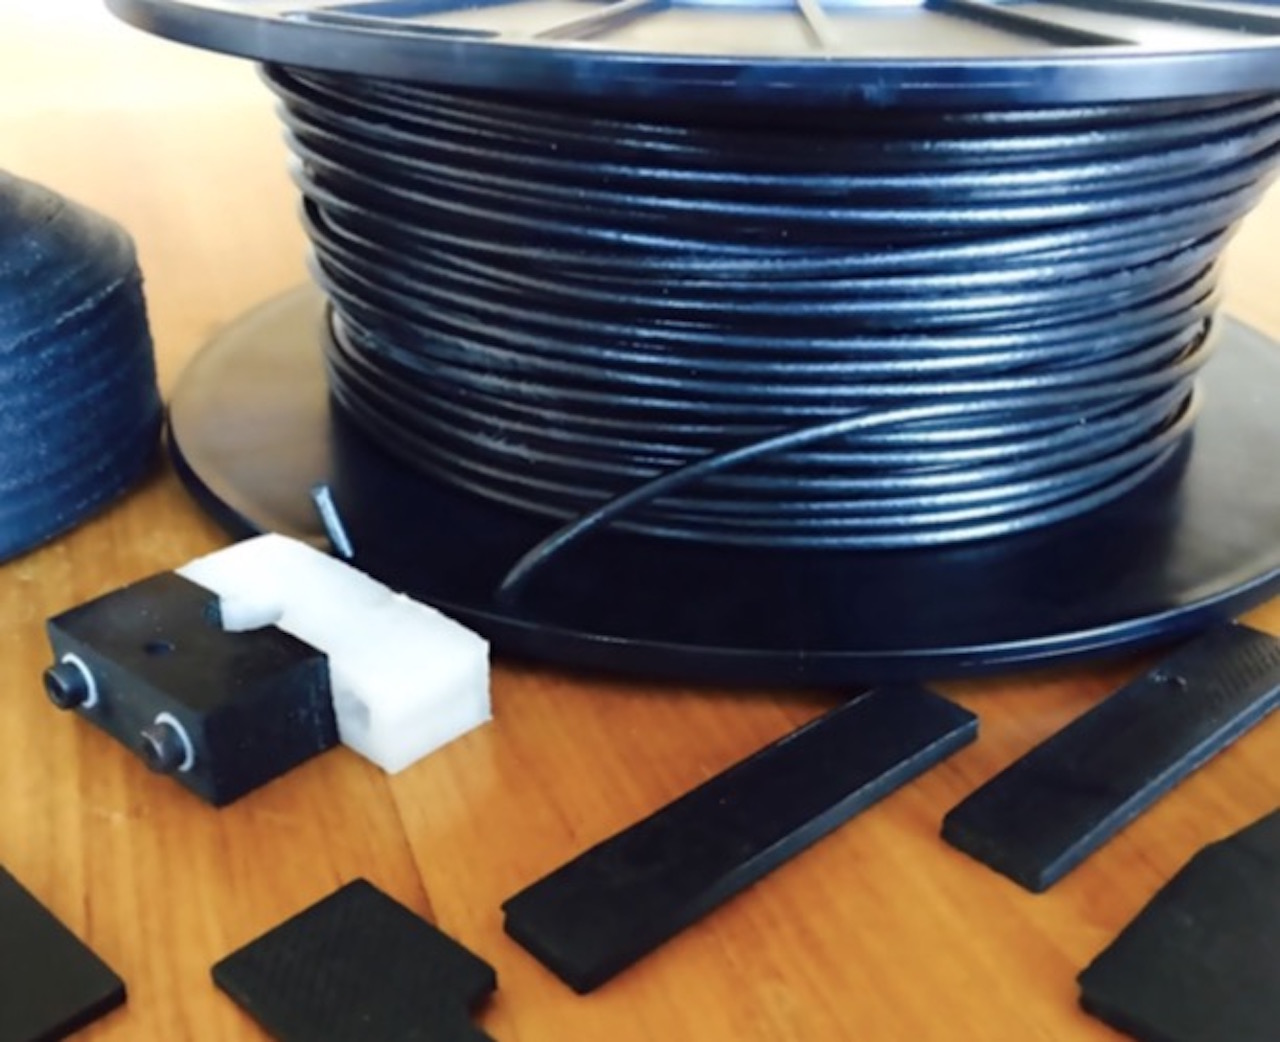  Avante Technology's new FilaONE Gray carbon nanotube 3D printer filament 